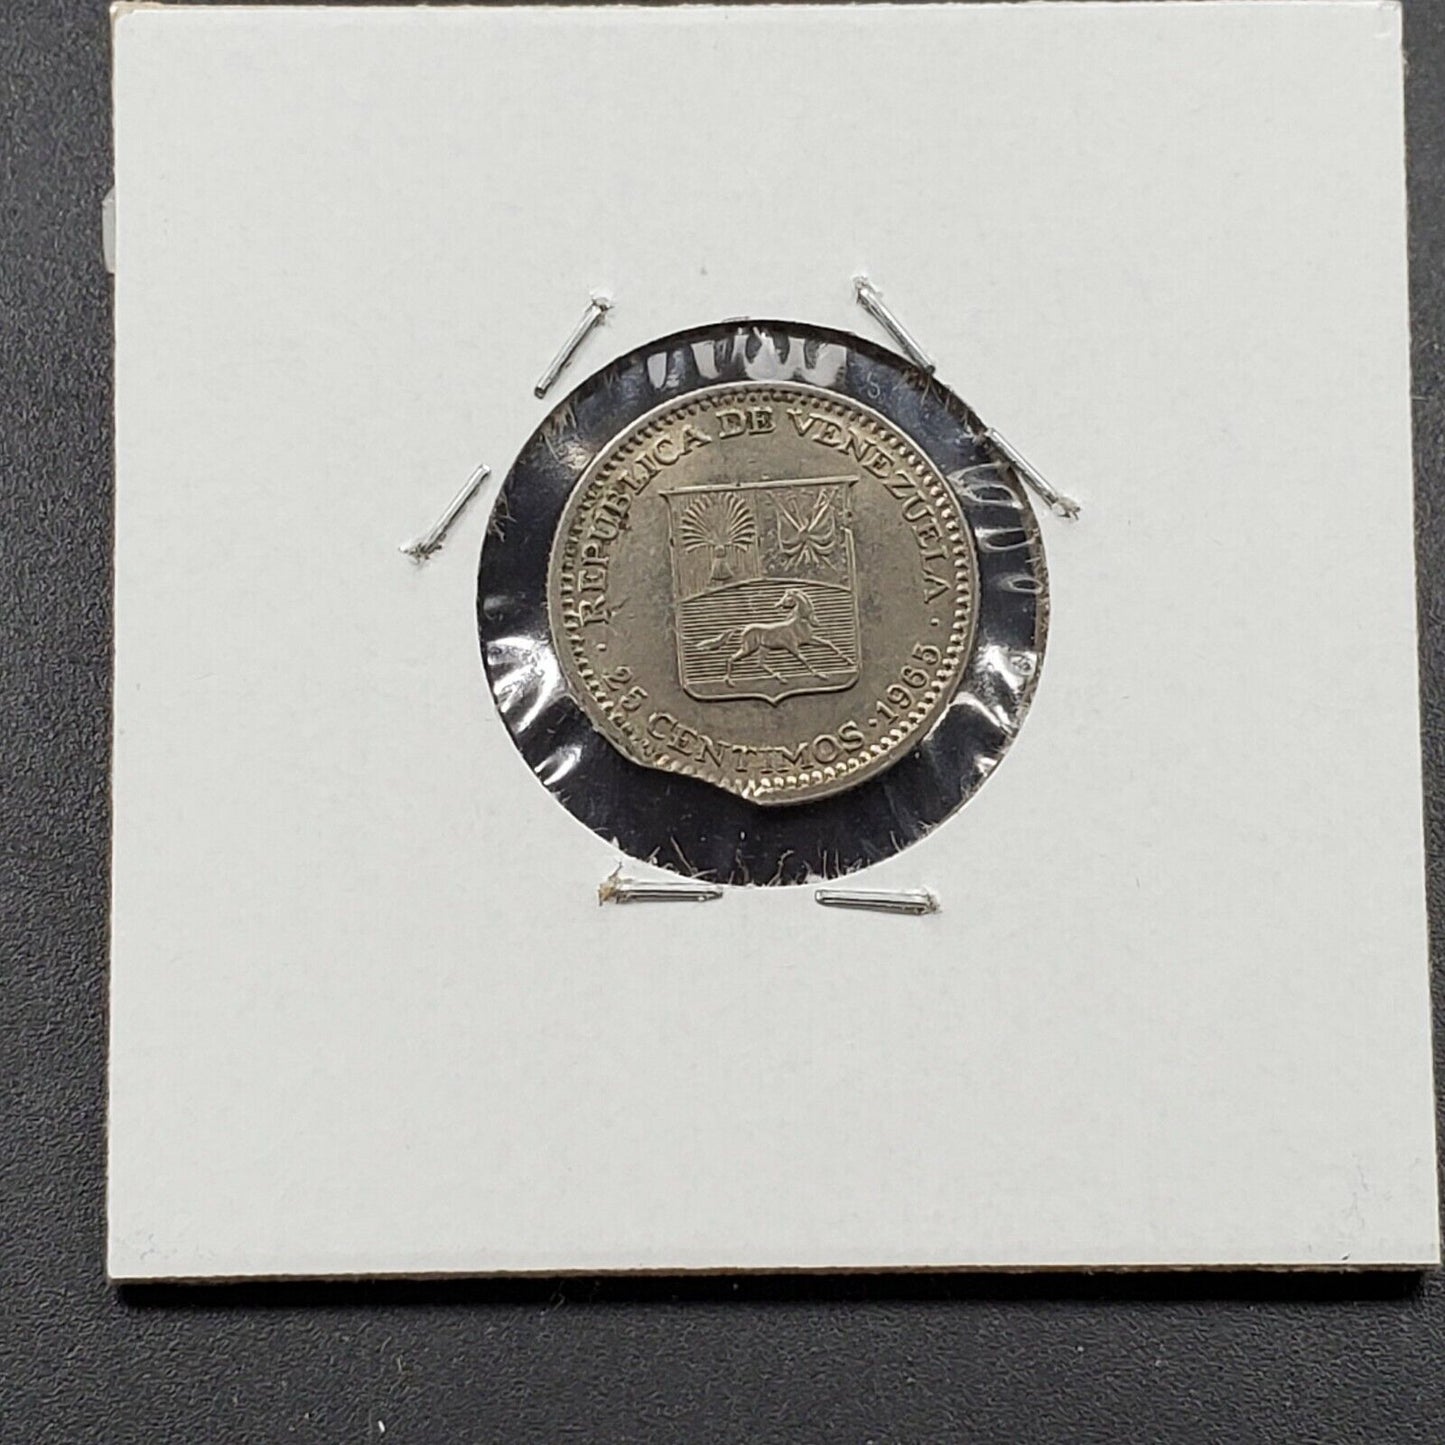 1965 VENEZUELA 25 CENTS COLLECTOR COIN W/ Clipped Planchet Error